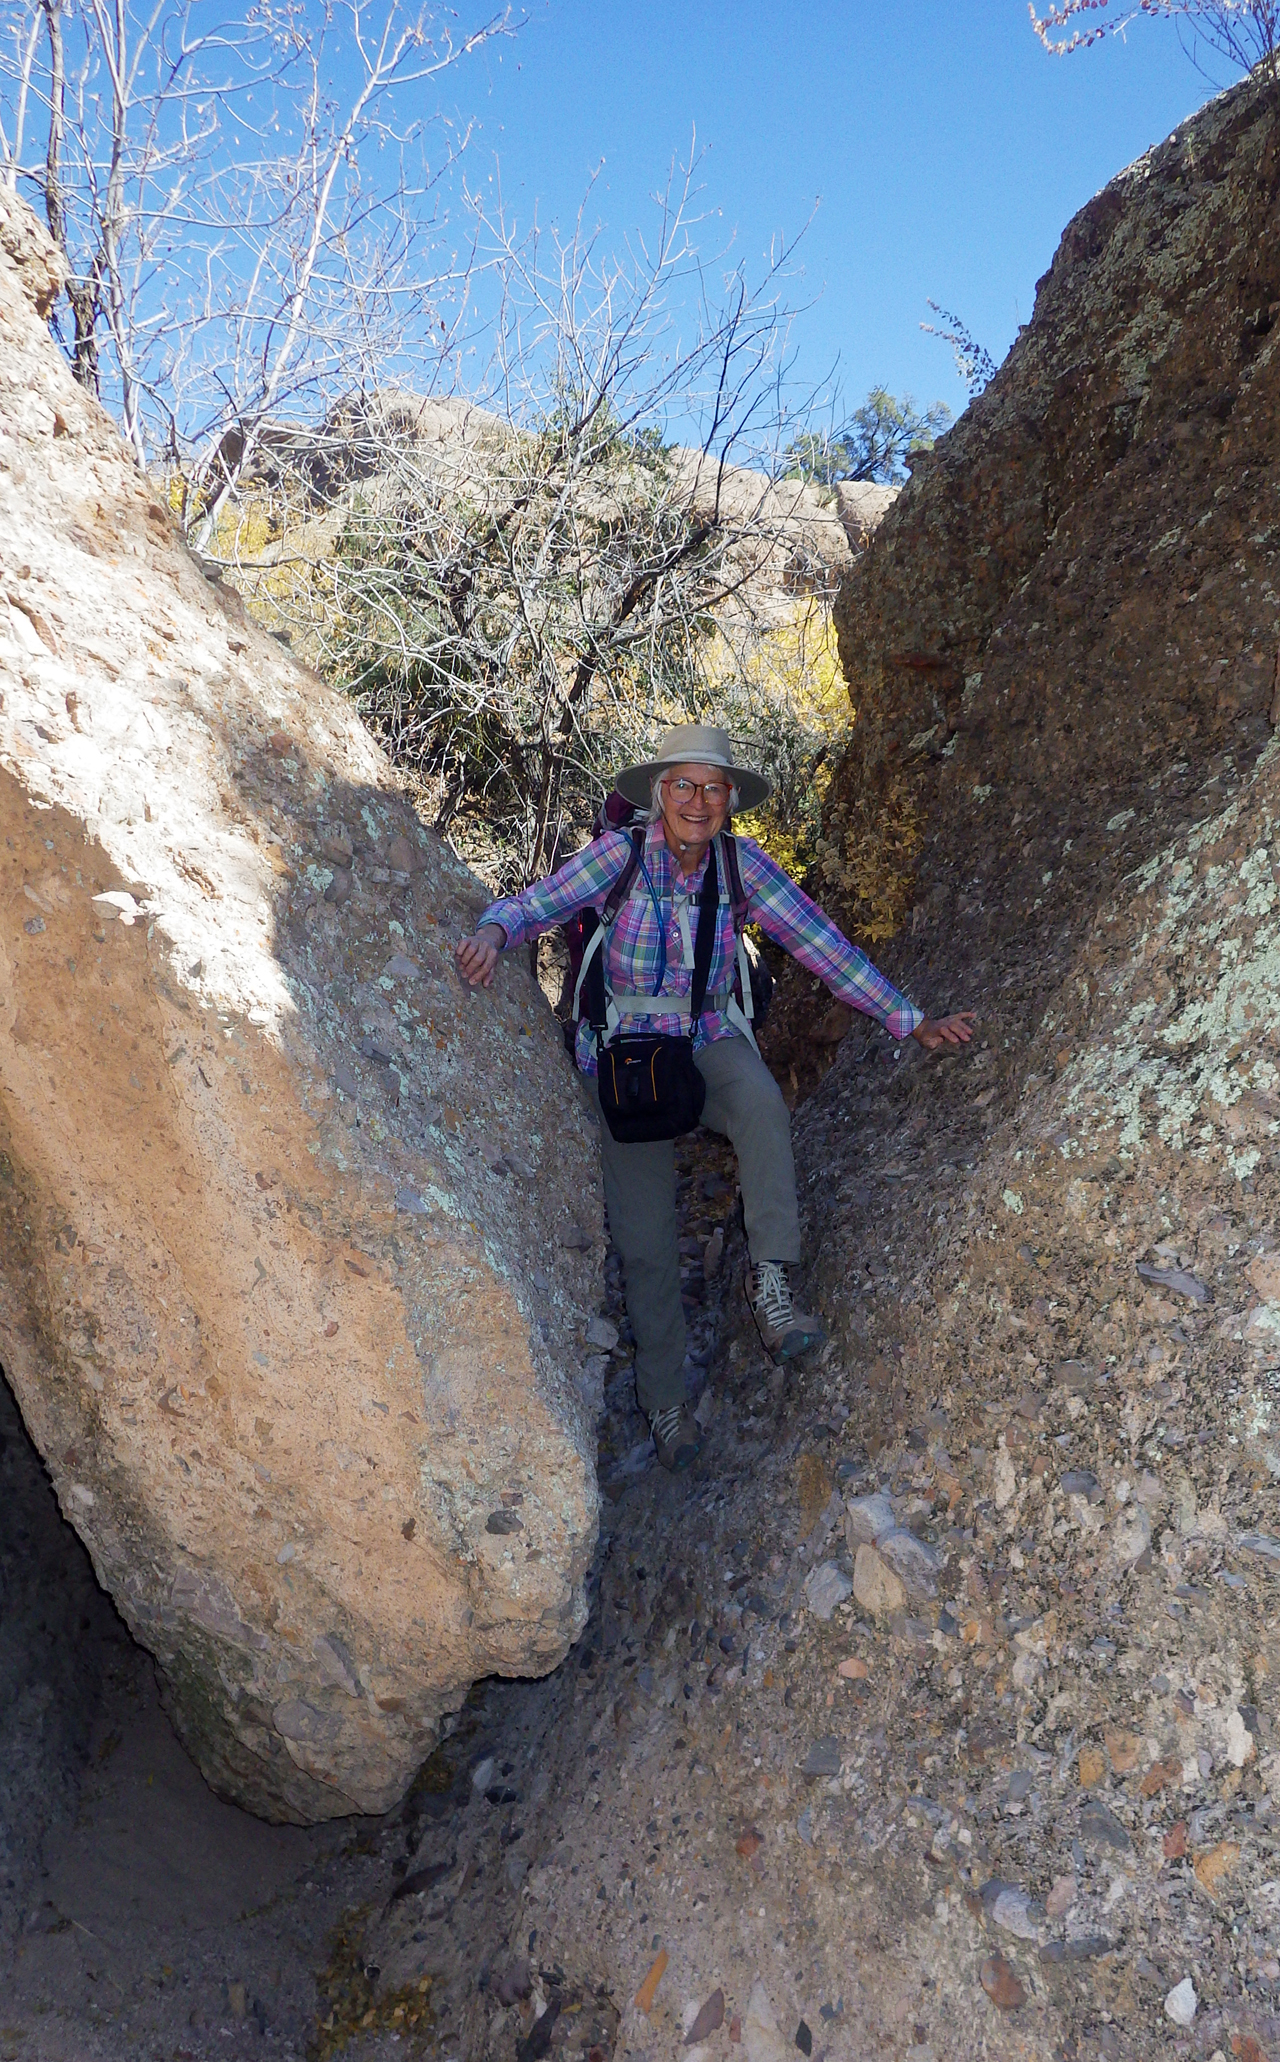 climbing over a boulder at the canyon mouth